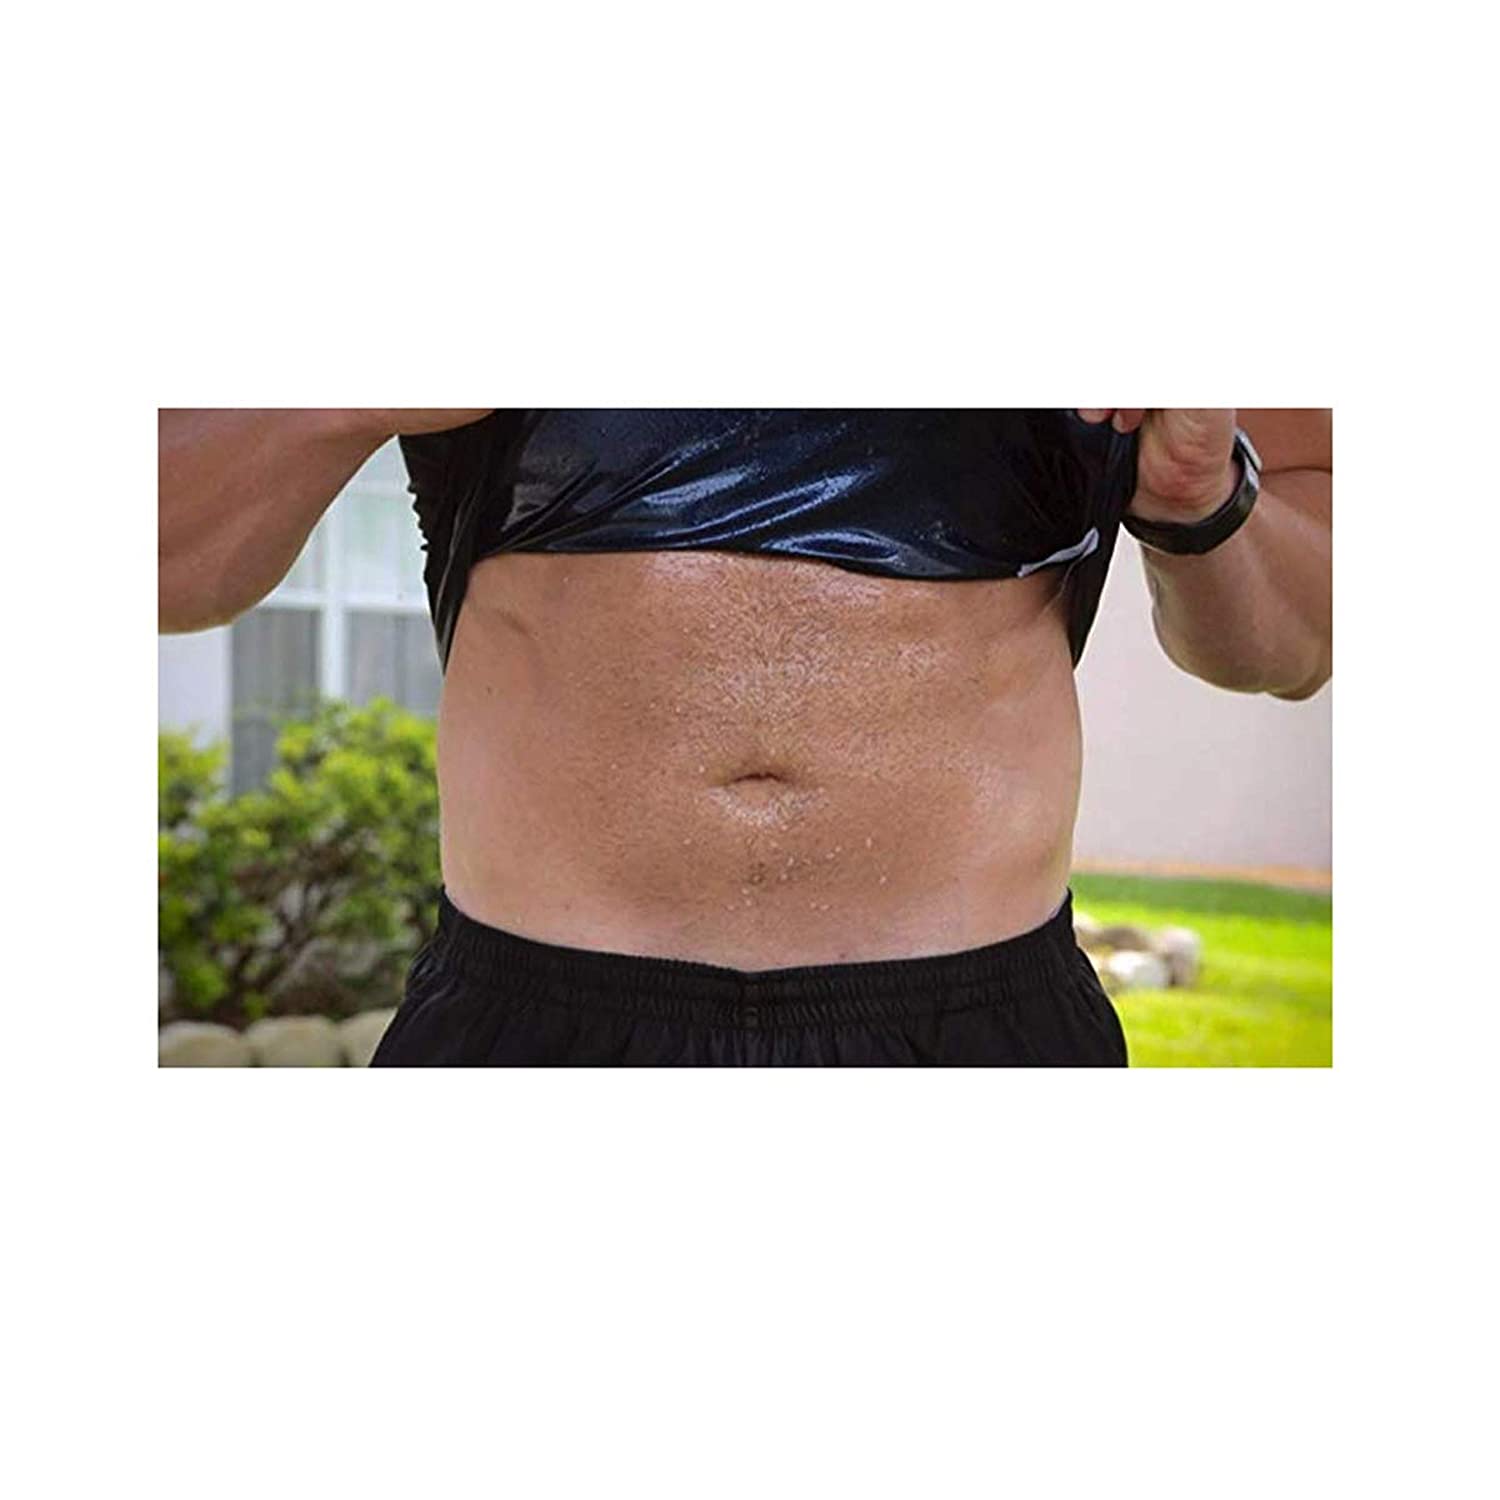 Sweat Shaper Premium Workout Tank Top Slimming Polymer Weight Loss Sauna  Vest, Black